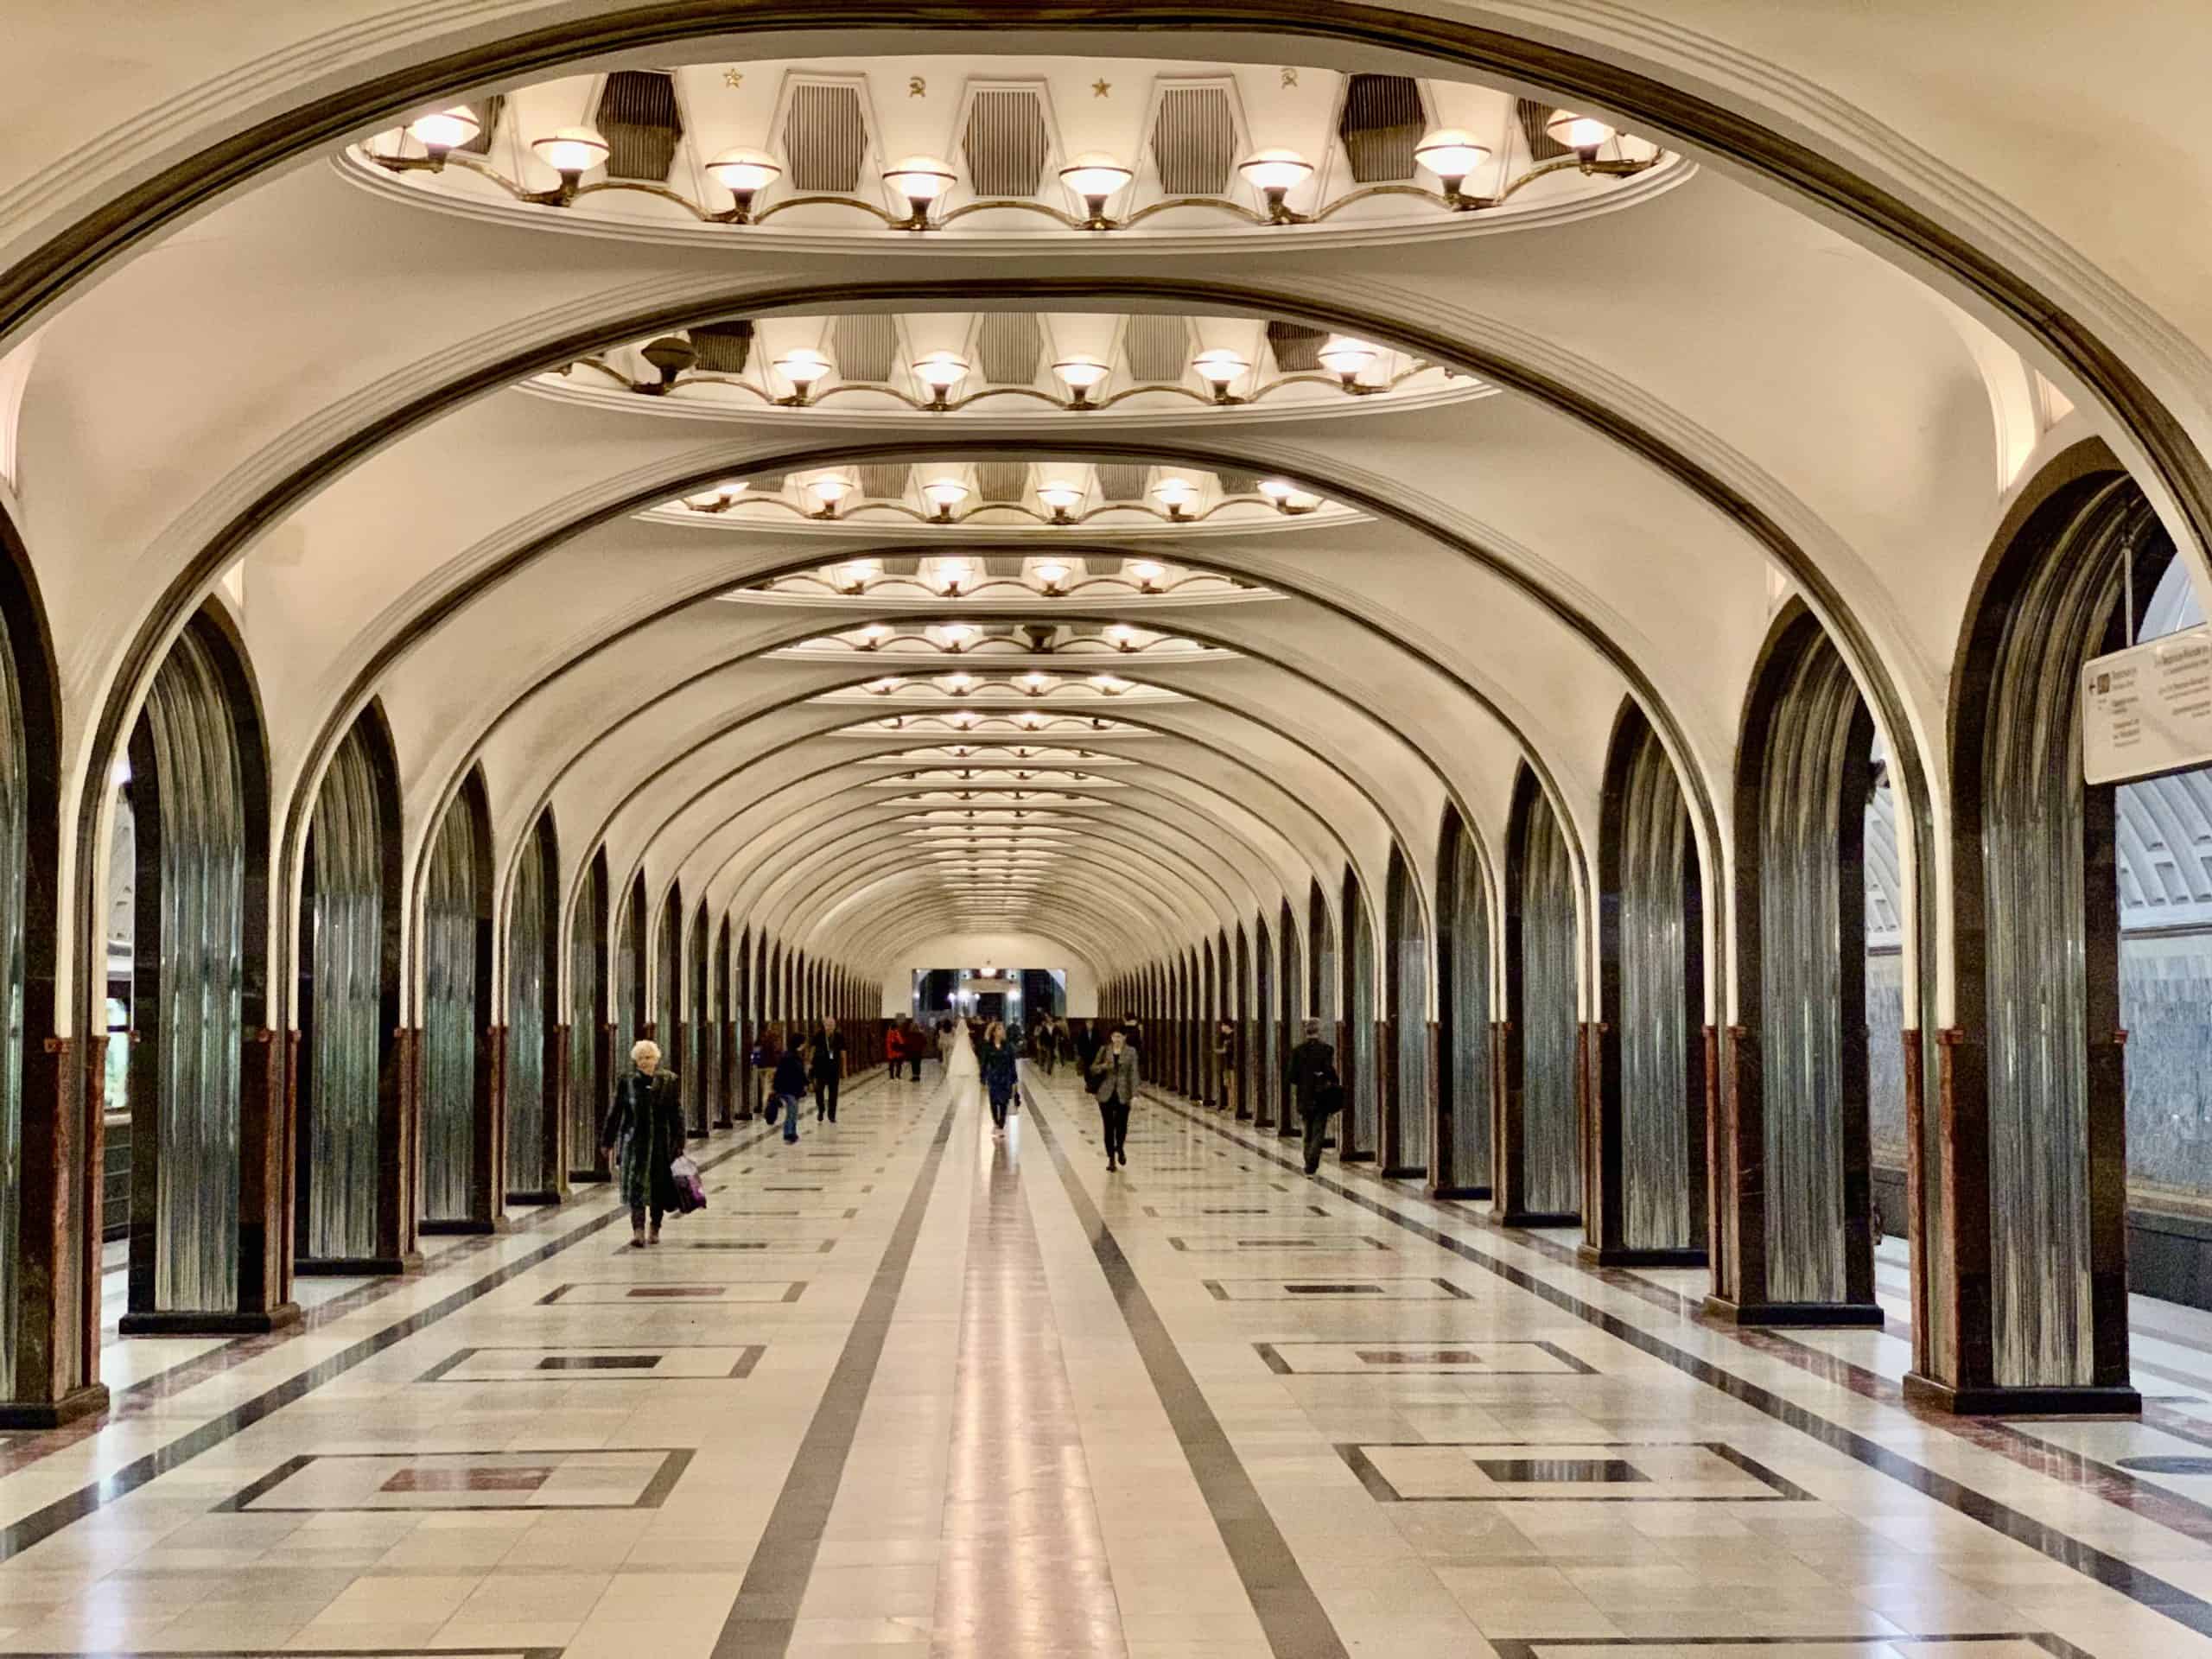 Mayakovskaya Station with polished steel archways